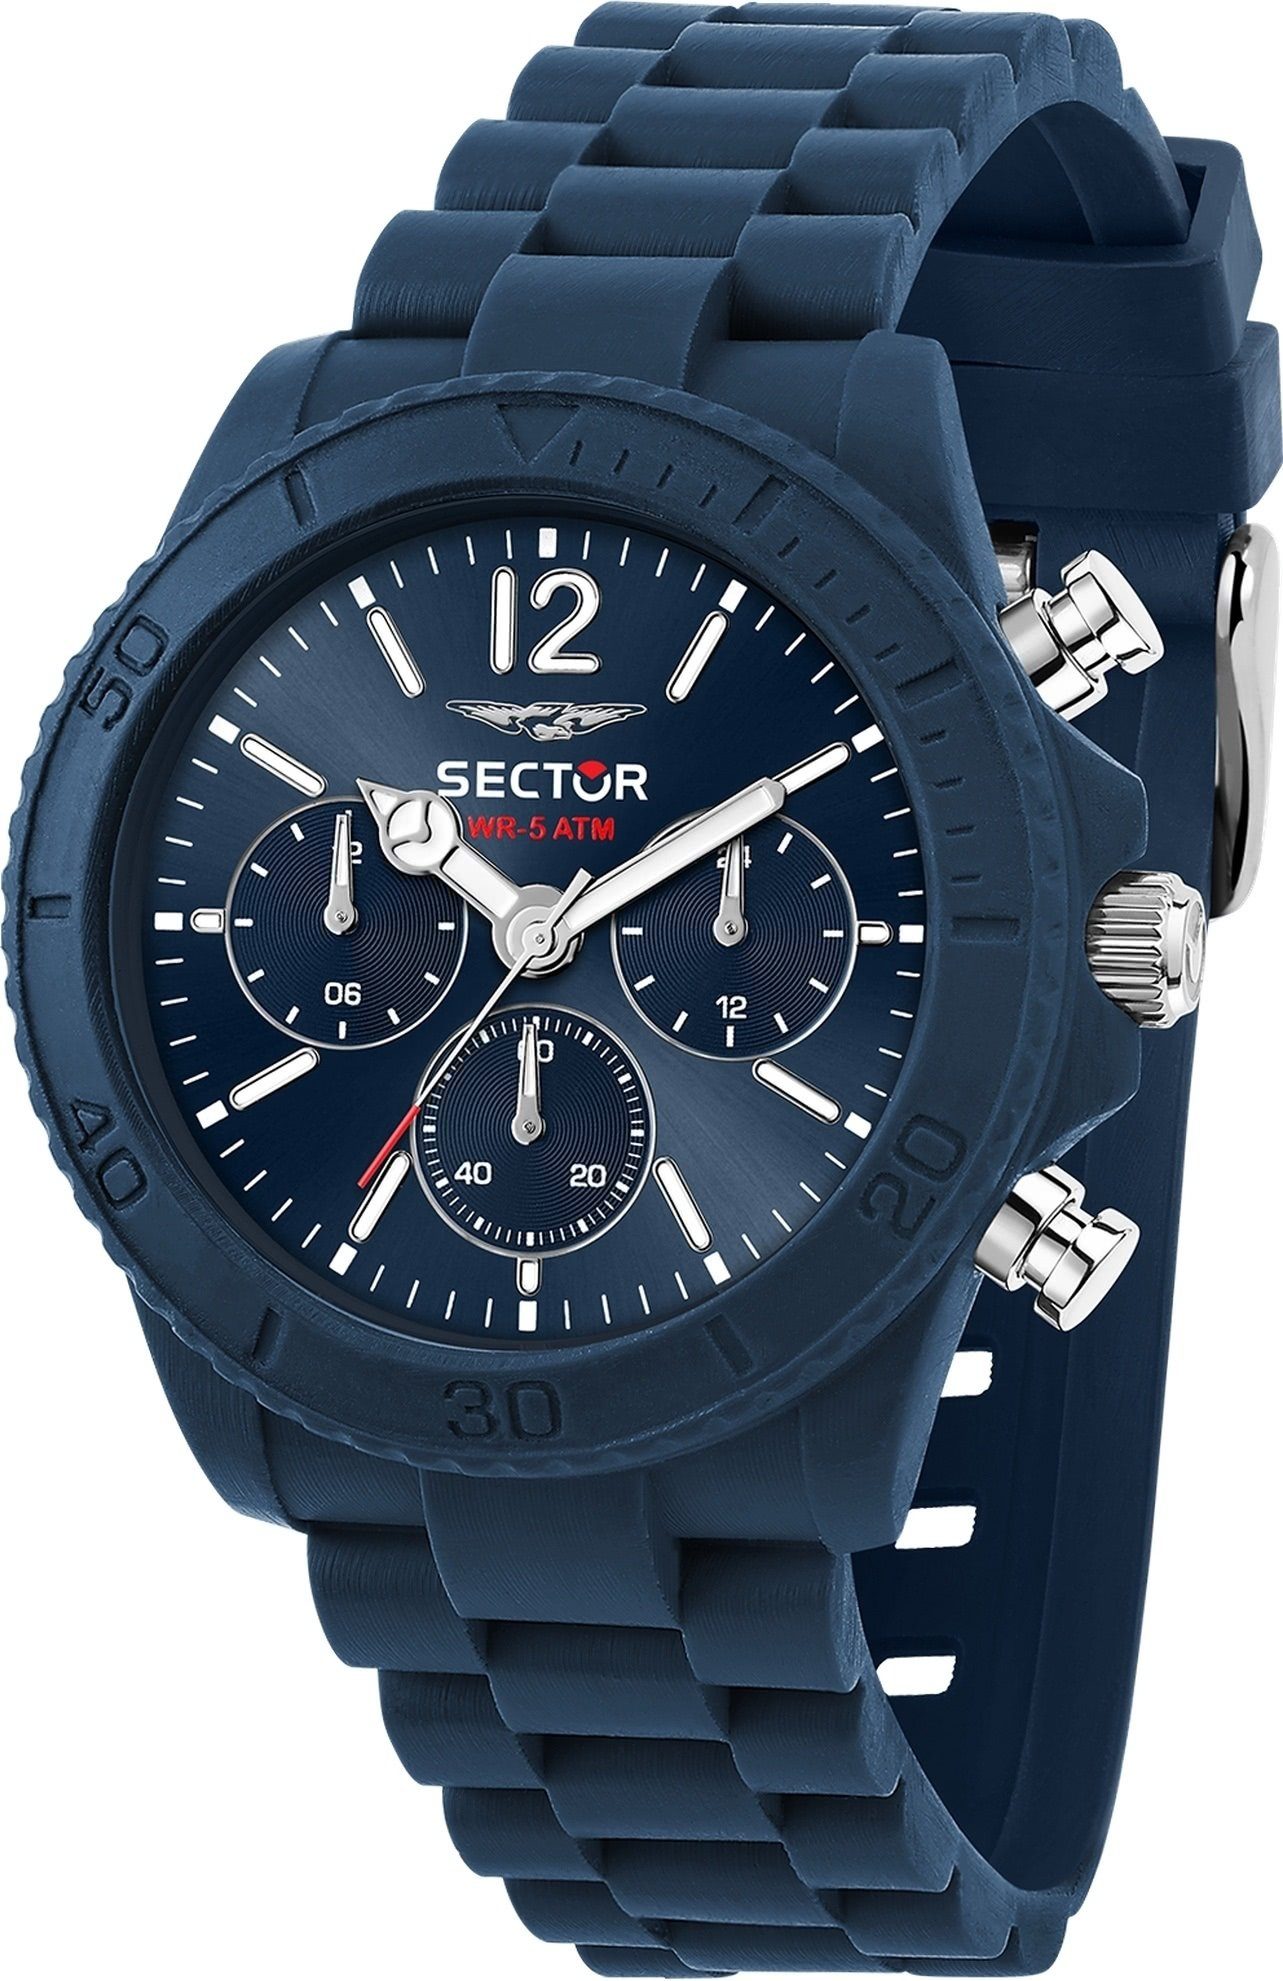 Sector Multifunktionsuhr Armbanduhr Silikonarmband (ca. Multifunktion, Armbanduhr Herren Fashion Herren groß Sector blau, 45mm), rund